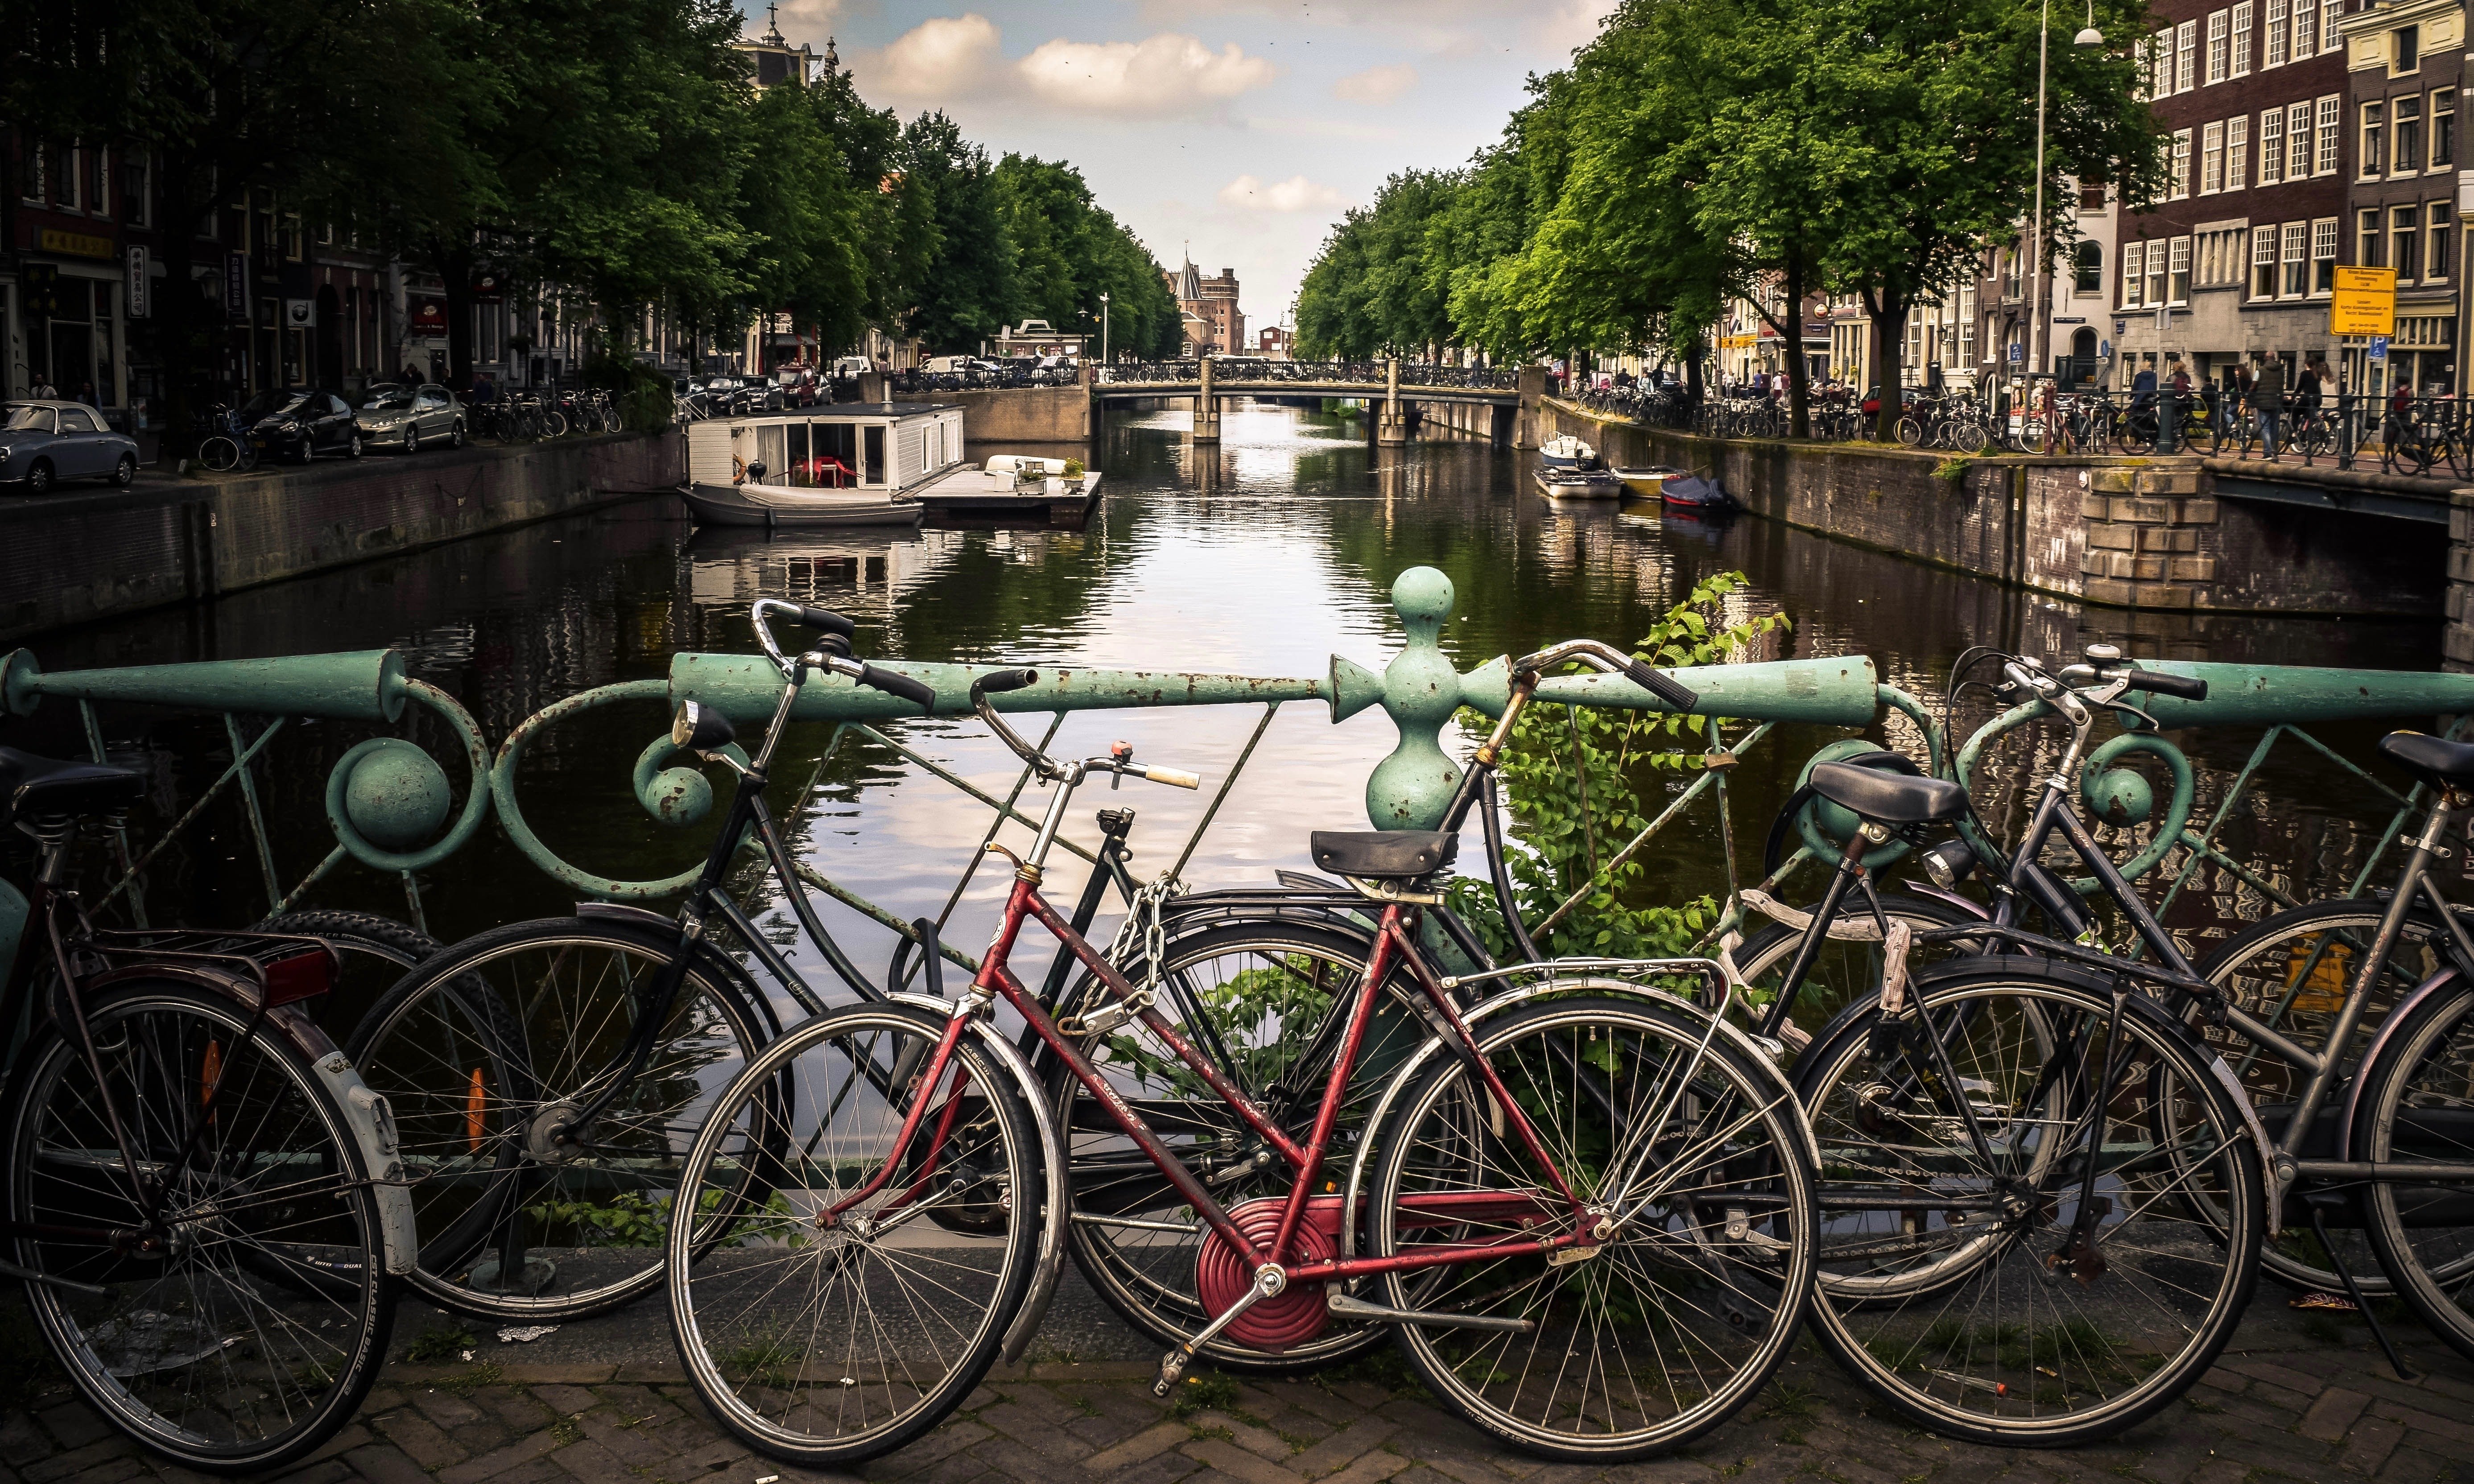 Bikes next to a river